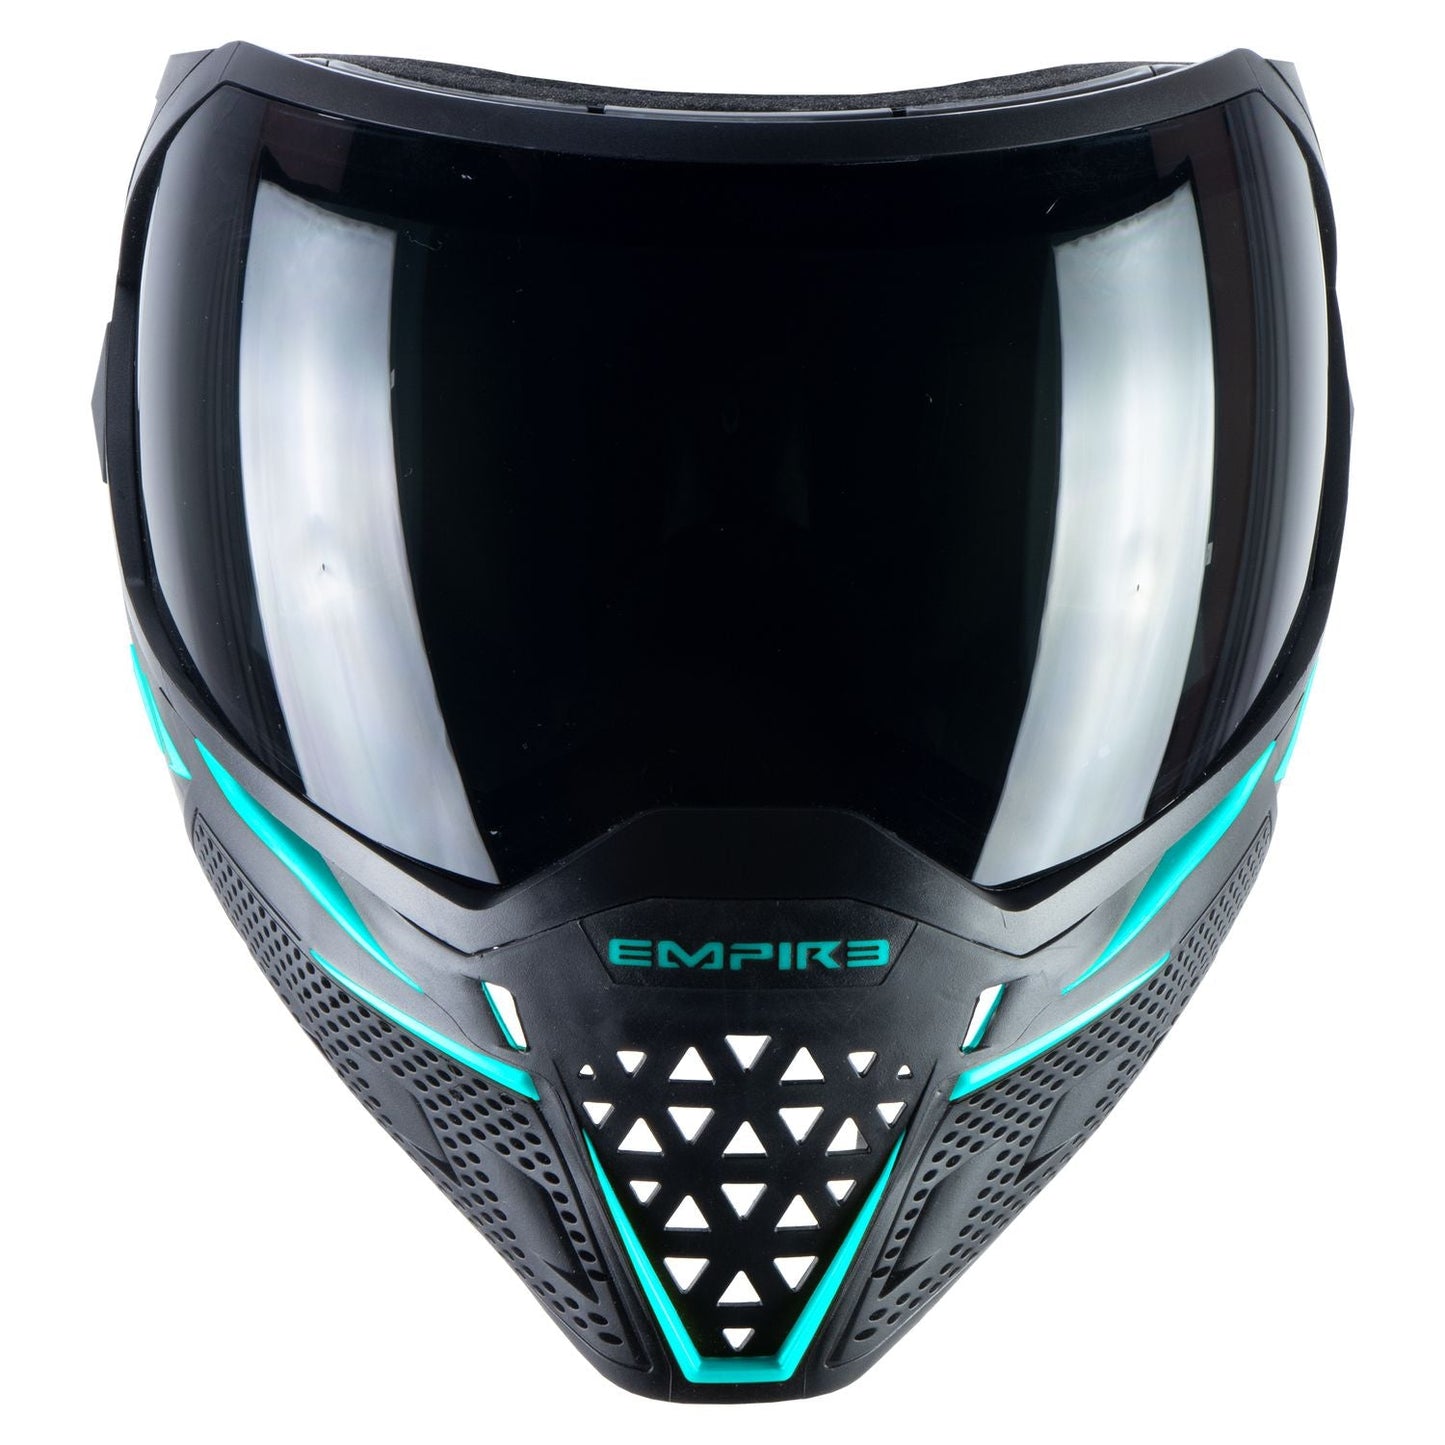 Empire EVS Black/Aqua with Thermal Ninja & Thermal Clear Lenses